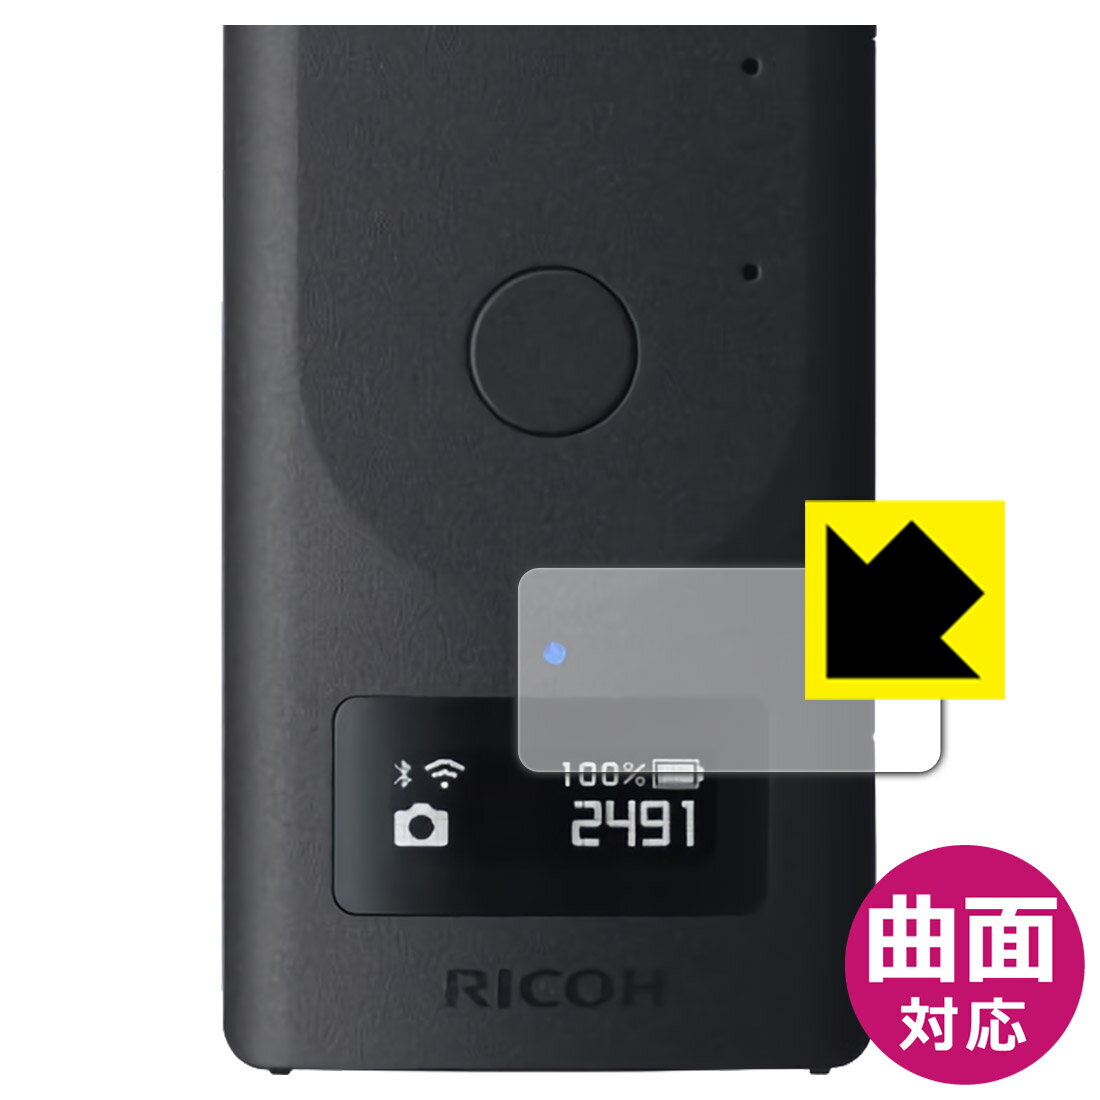 Flexible Shield【光沢】保護フィルム RICOH THETA Z1 51GB / RICOH THETA Z1 (表示パネル部用) 日本製 自社製造直販